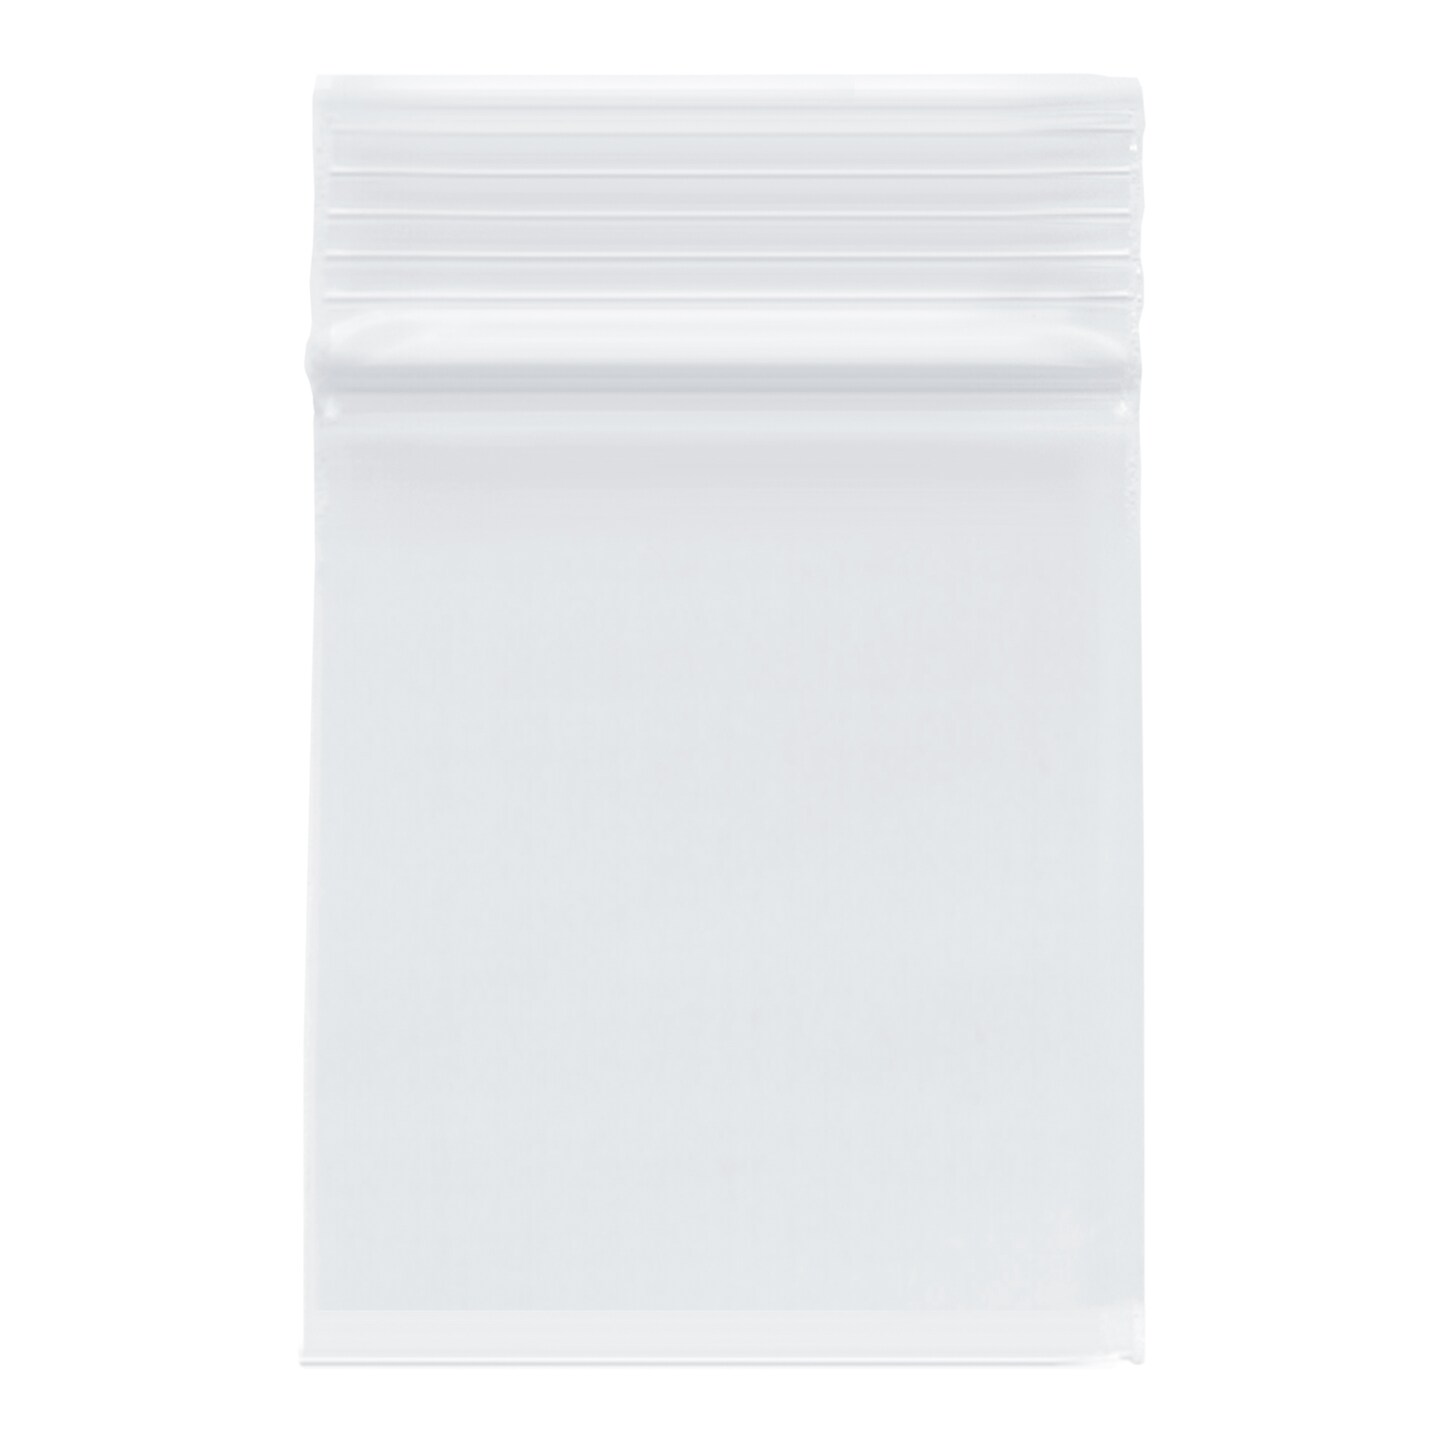 Plymor Zipper Reclosable Plastic Bags, 2 Mil, 2.5 x 2.5 (Case of 1,000) 